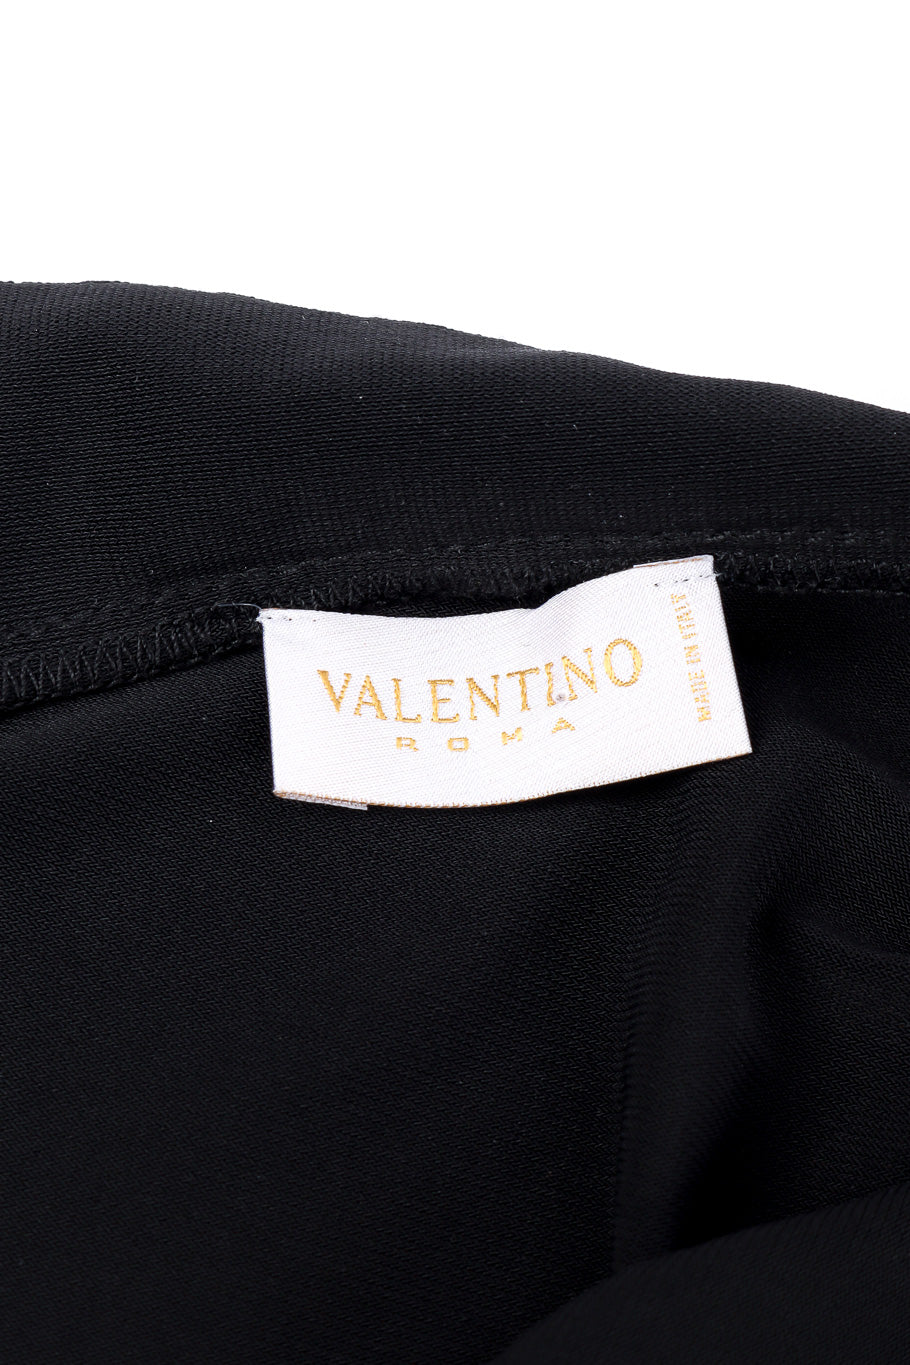 Valentino one shoulder sequin gown designer label @recessla